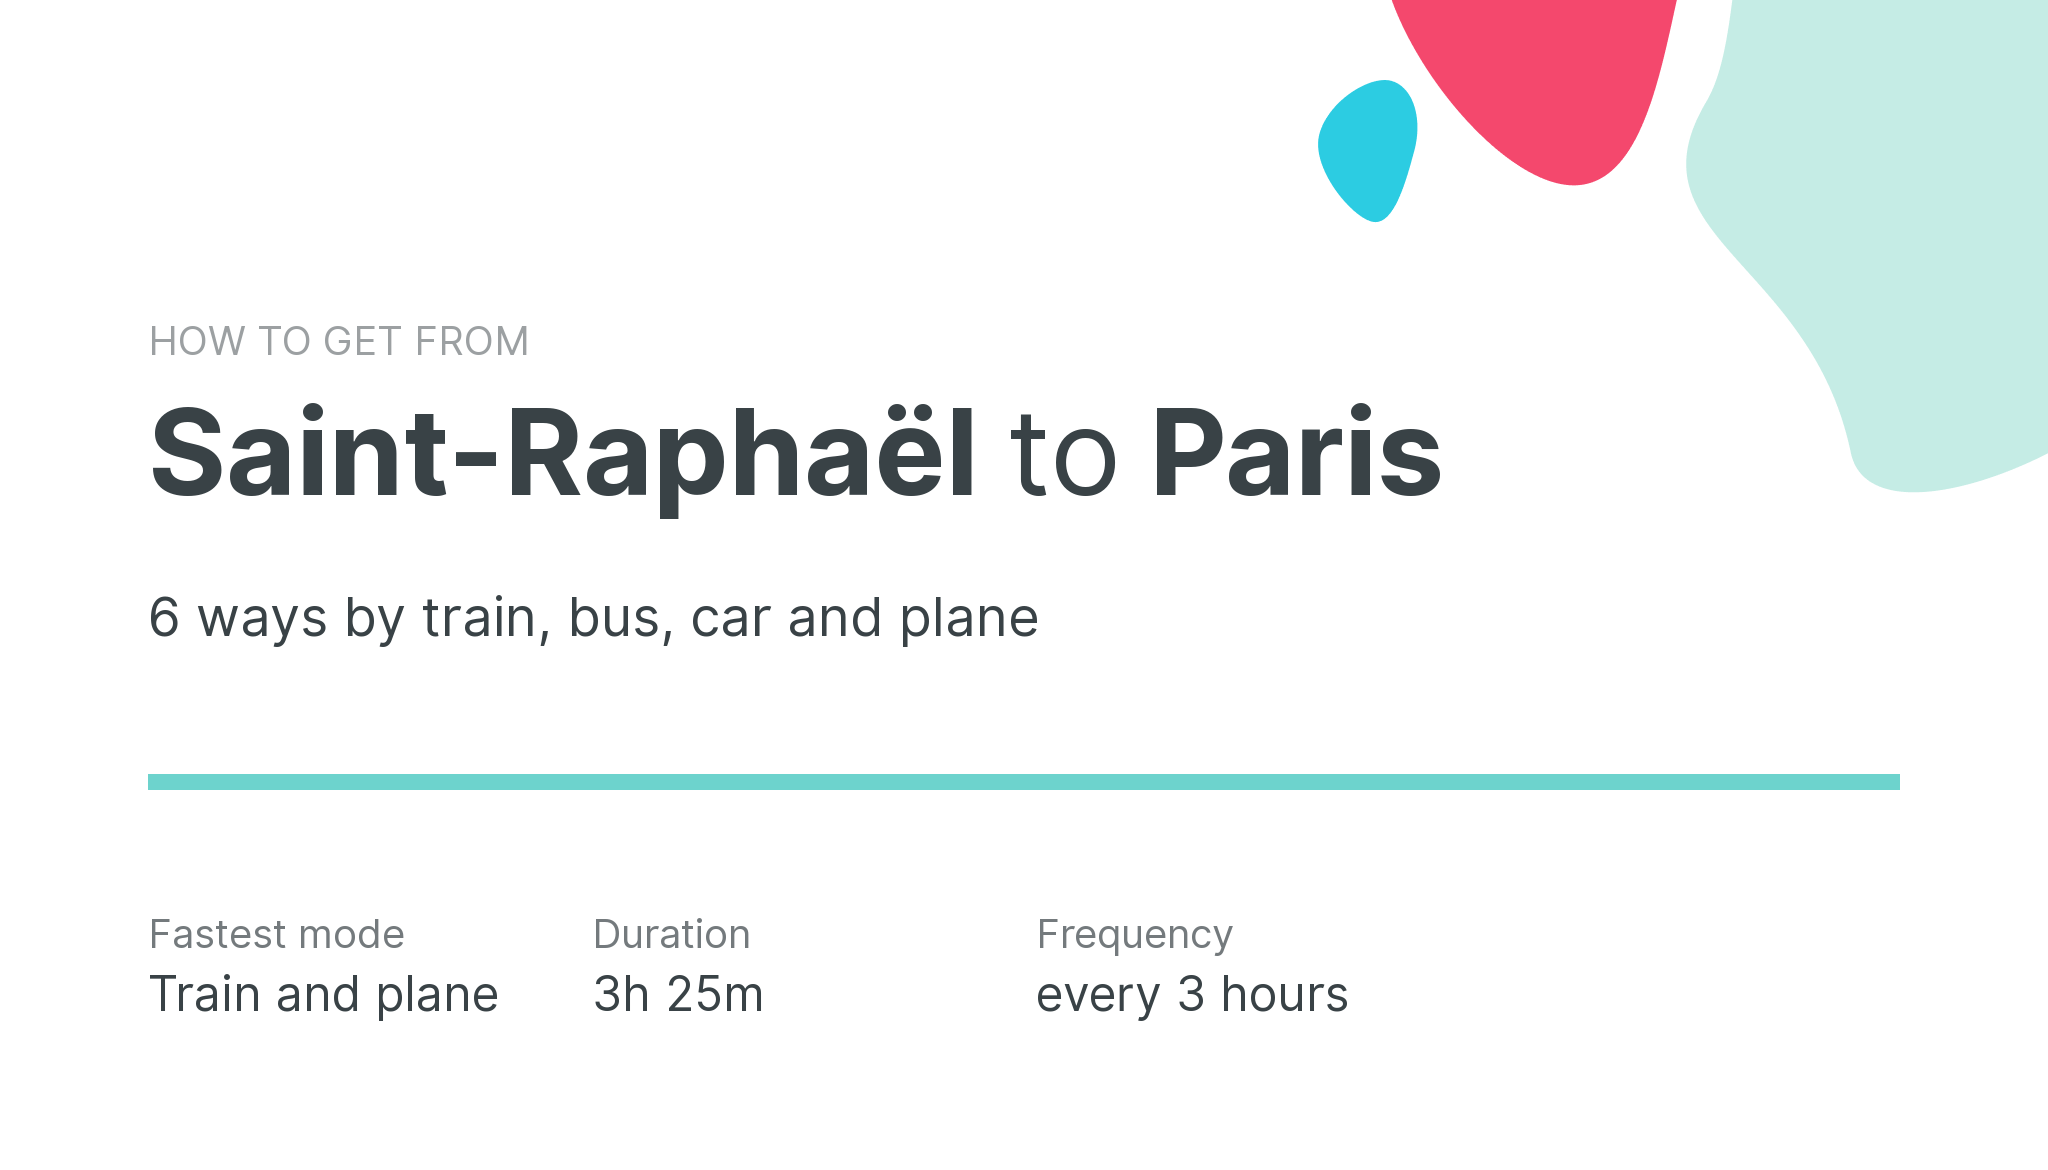 How do I get from Saint-Raphaël to Paris